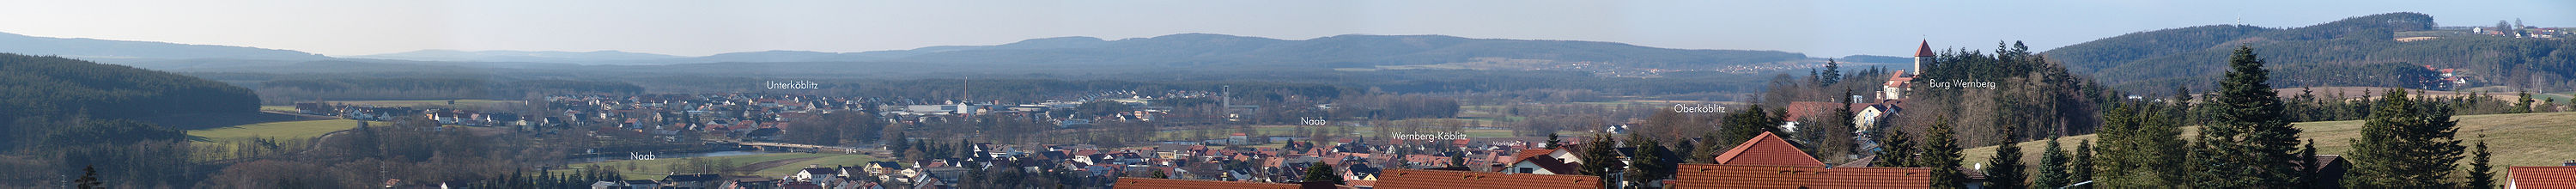 Panorama Wernberg-Köblitz